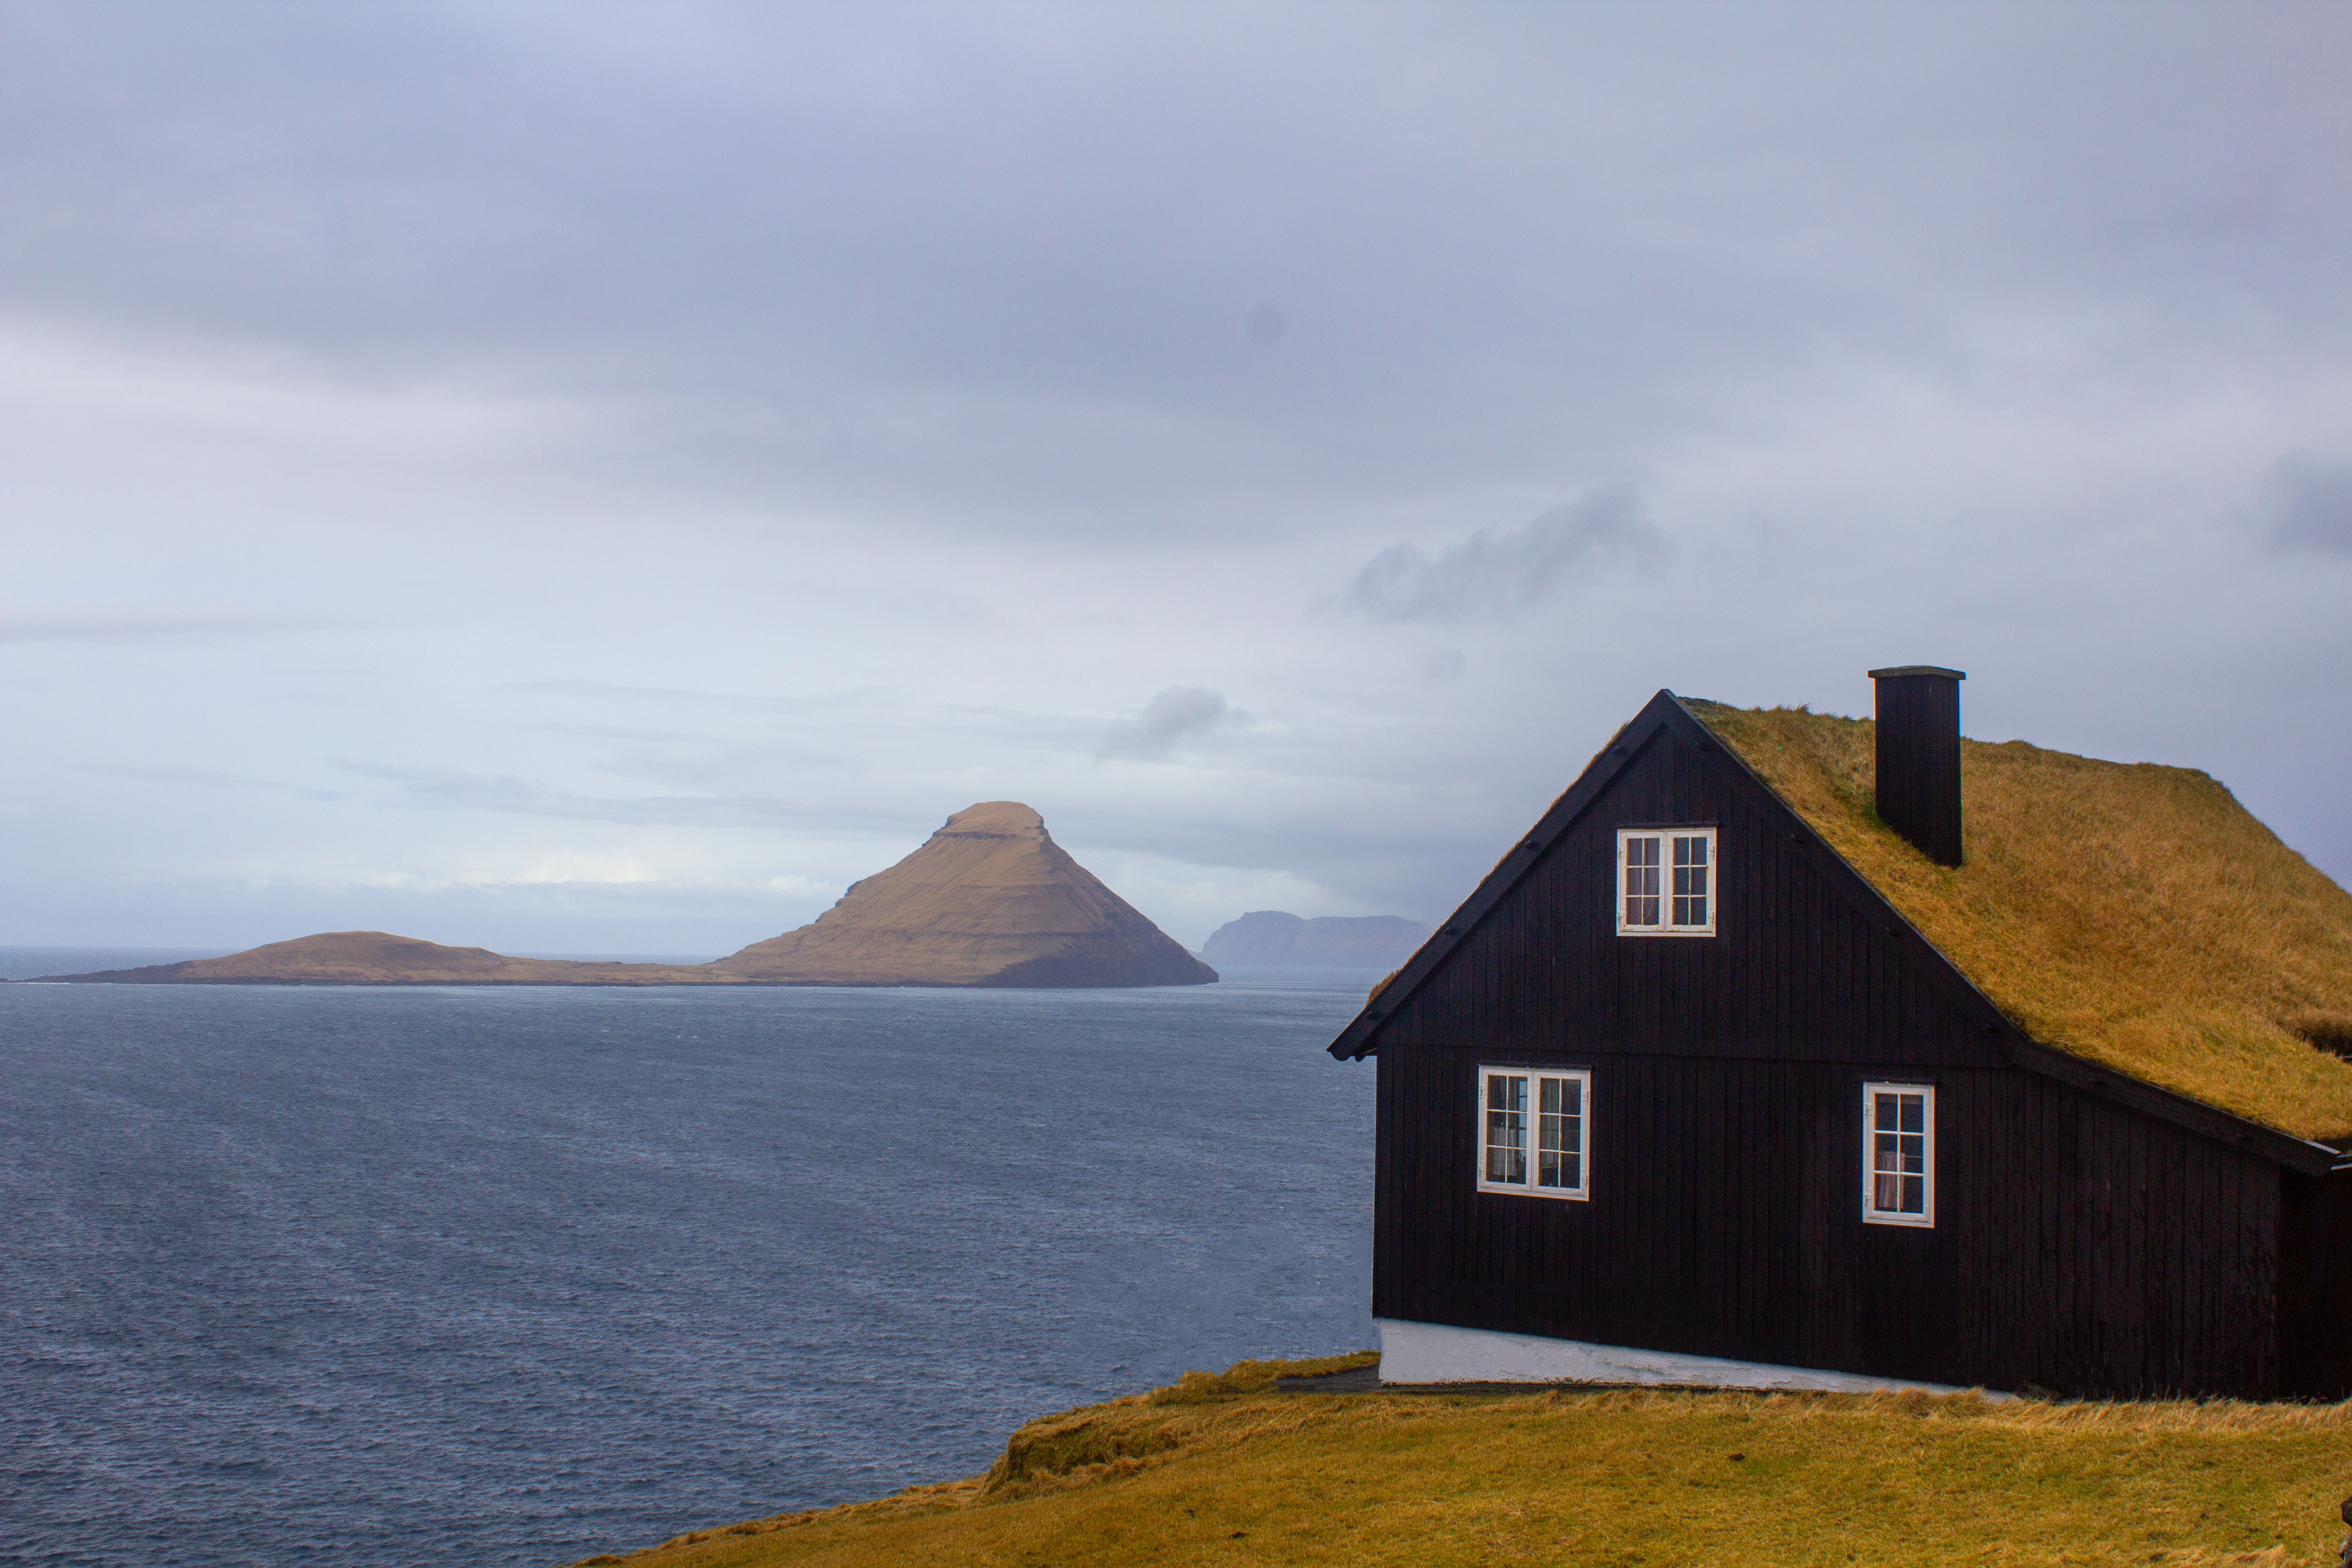 The Faroe Islands - John Gregory-Smith 